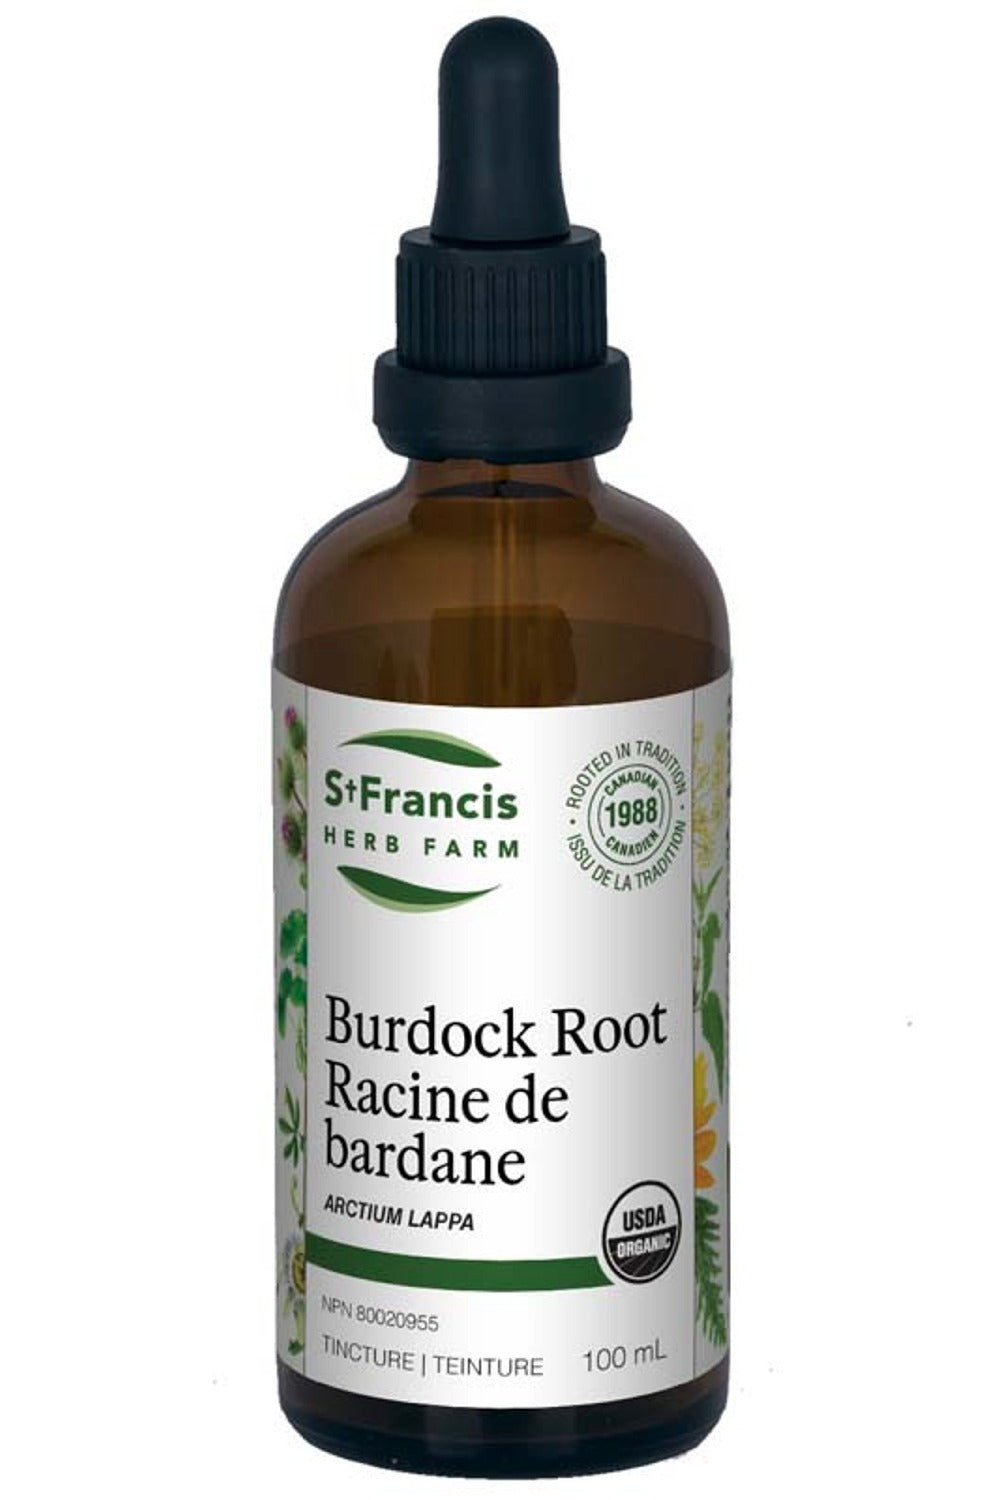 ST FRANCIS HERB FARM Burdock Root (100 ml)